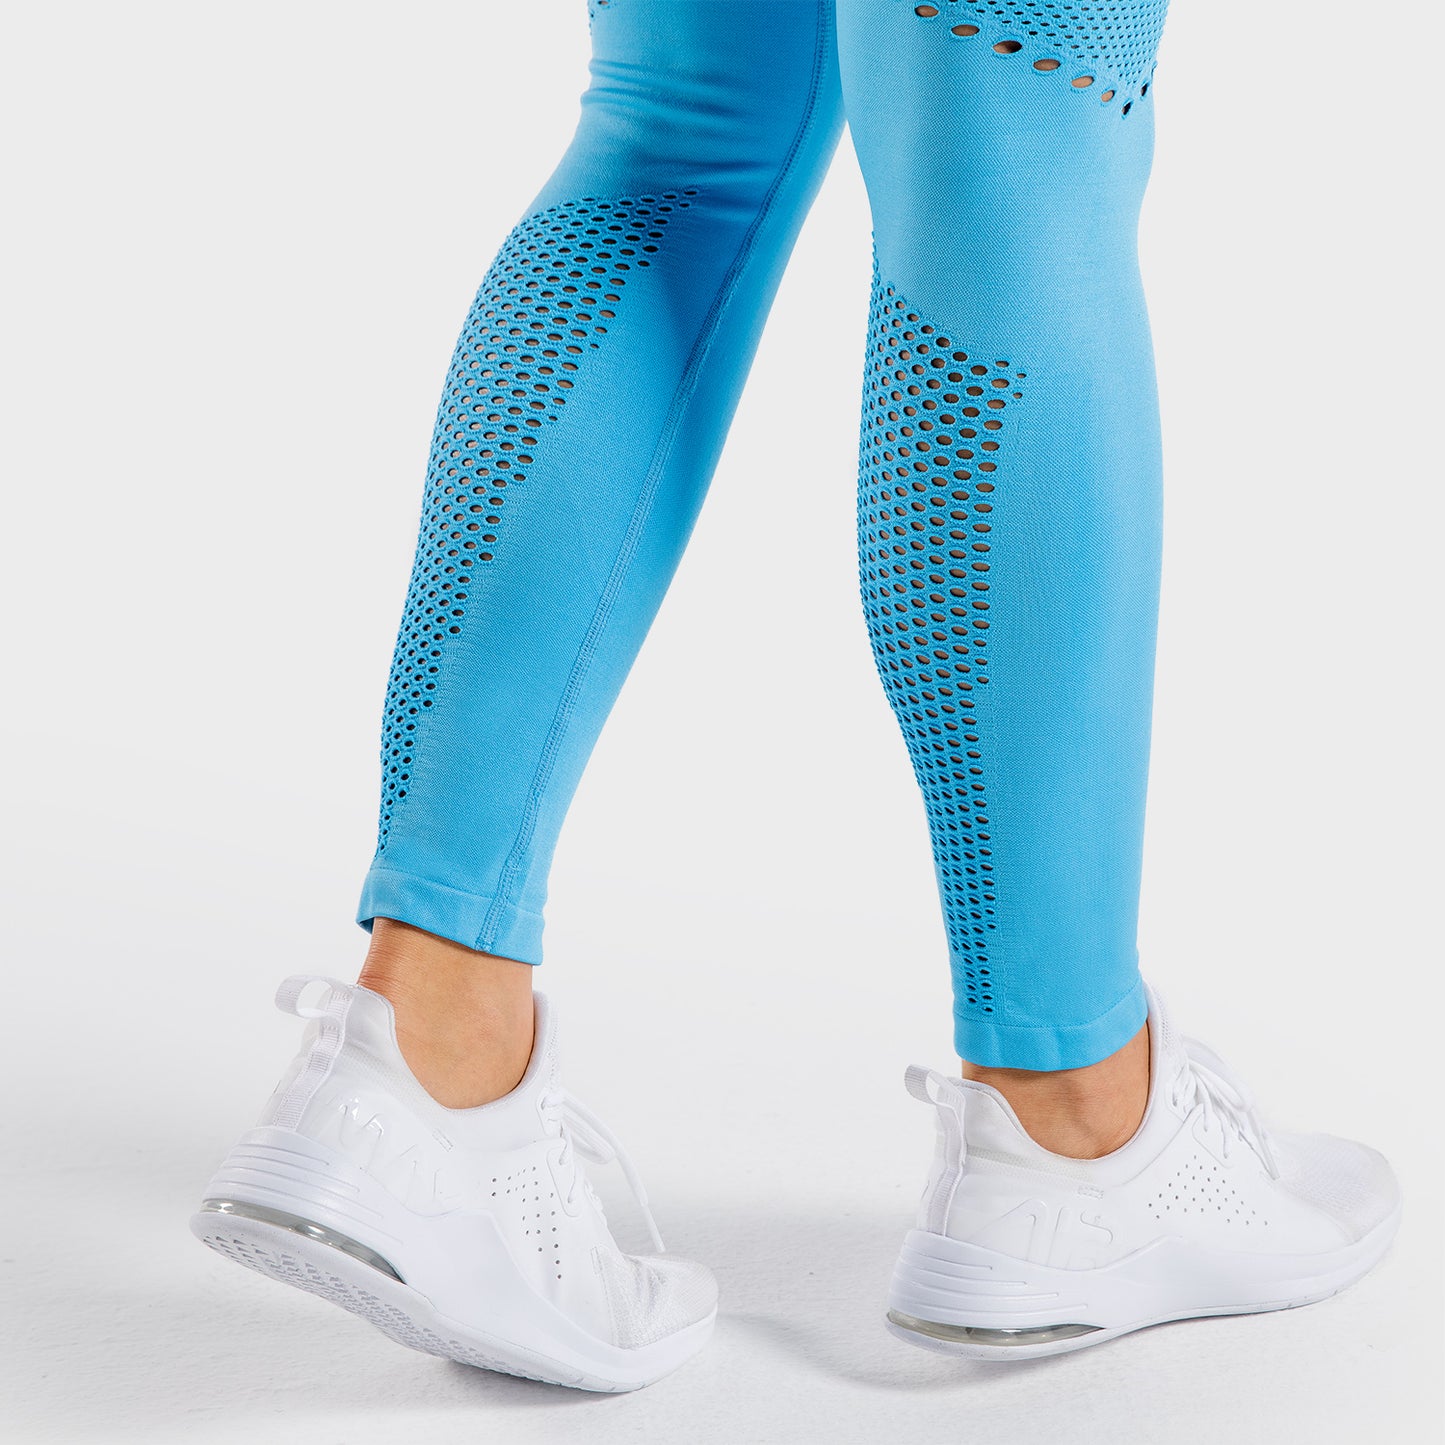 squatwolf-gym-leggings-for-women-meta-seamless-leggings-sky-blue-workout-clothes